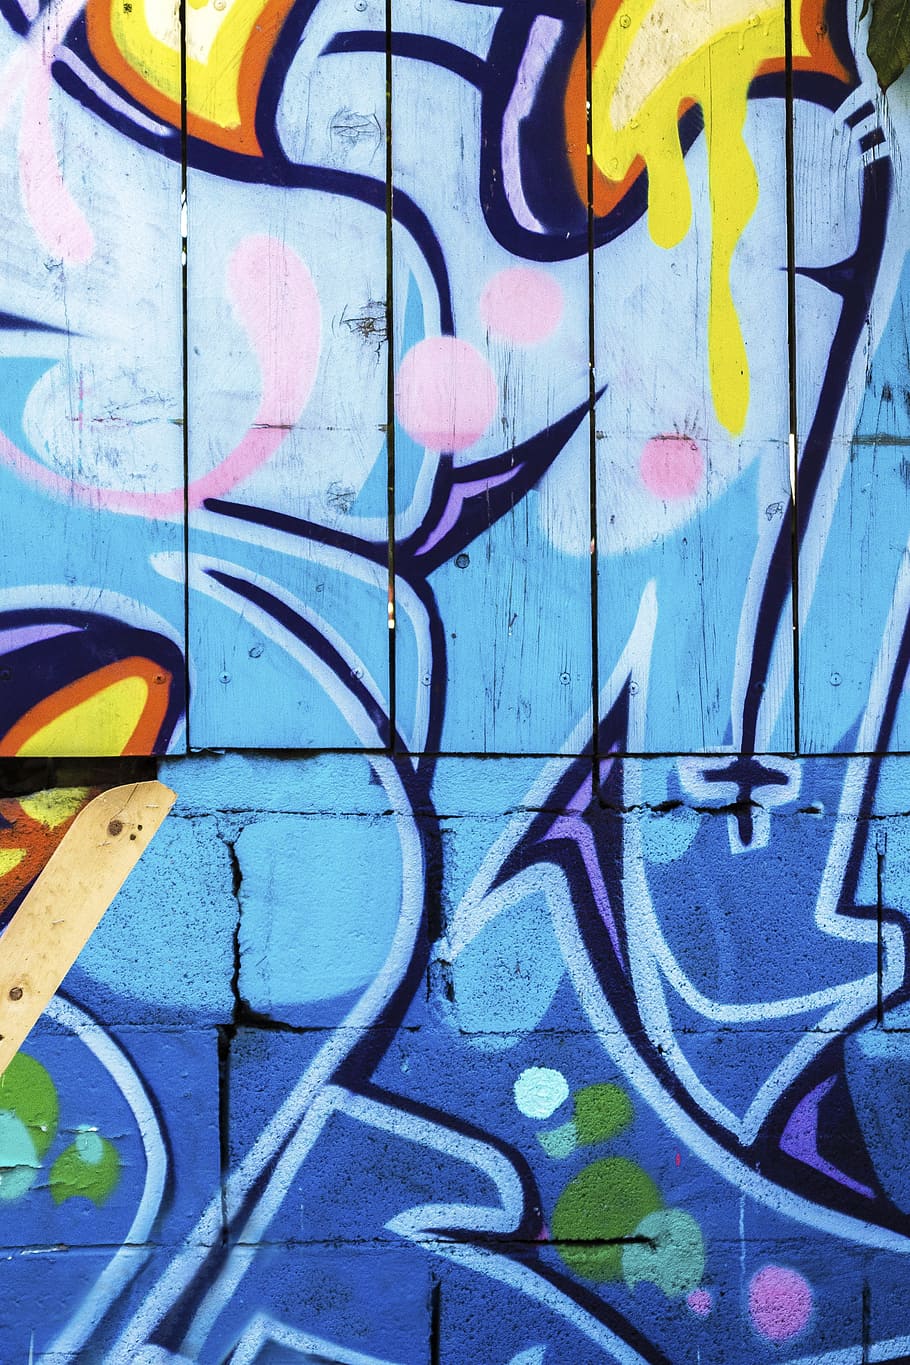 latar belakang, grafiti, grunge, seni jalanan, dinding grafiti, seni grafiti, artistik, dicat, cat semprot, seni